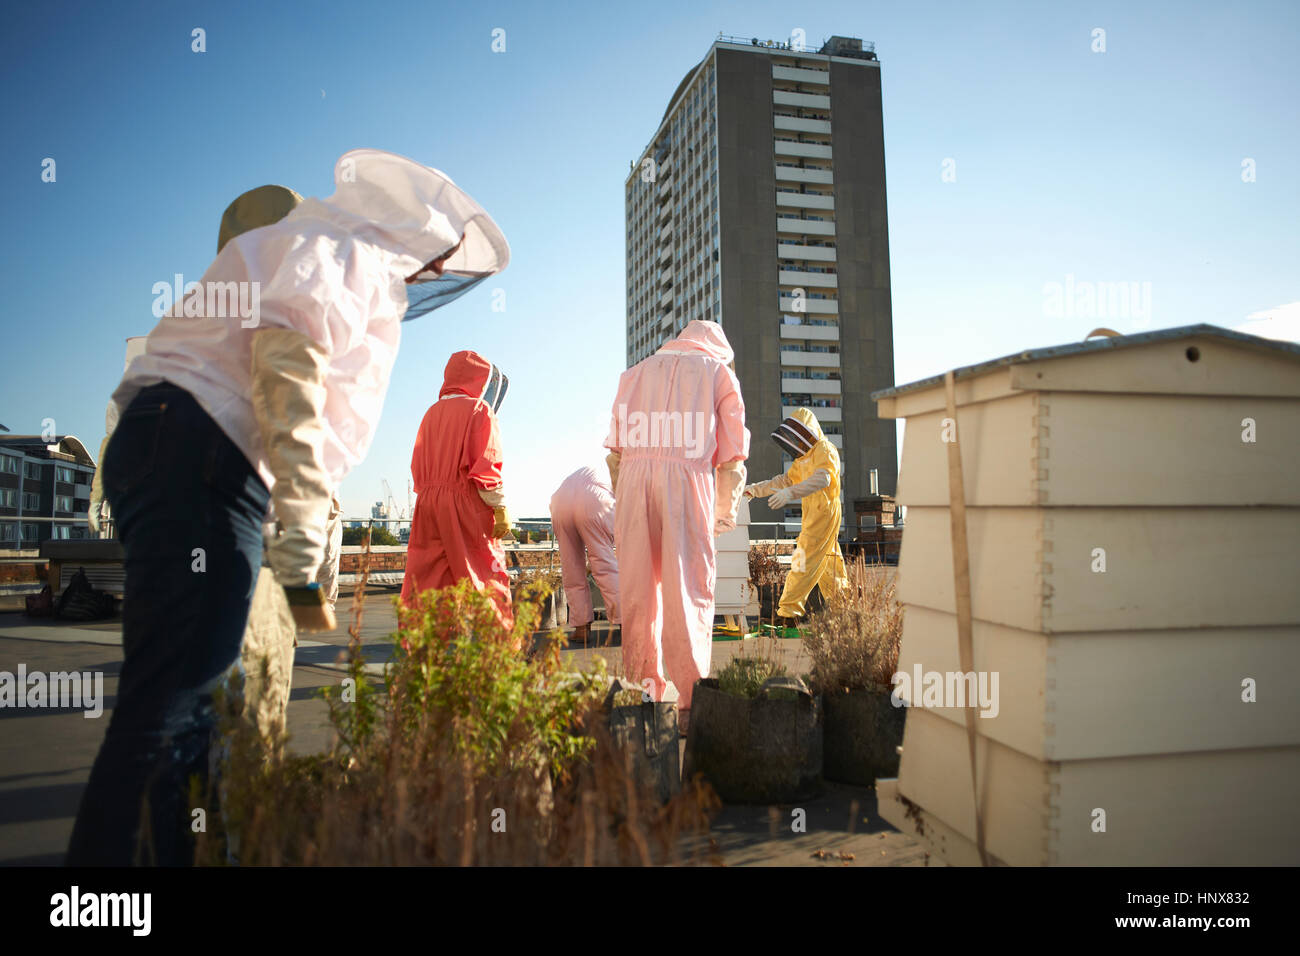 Beekeepers tending aviary on city rooftop Stock Photo